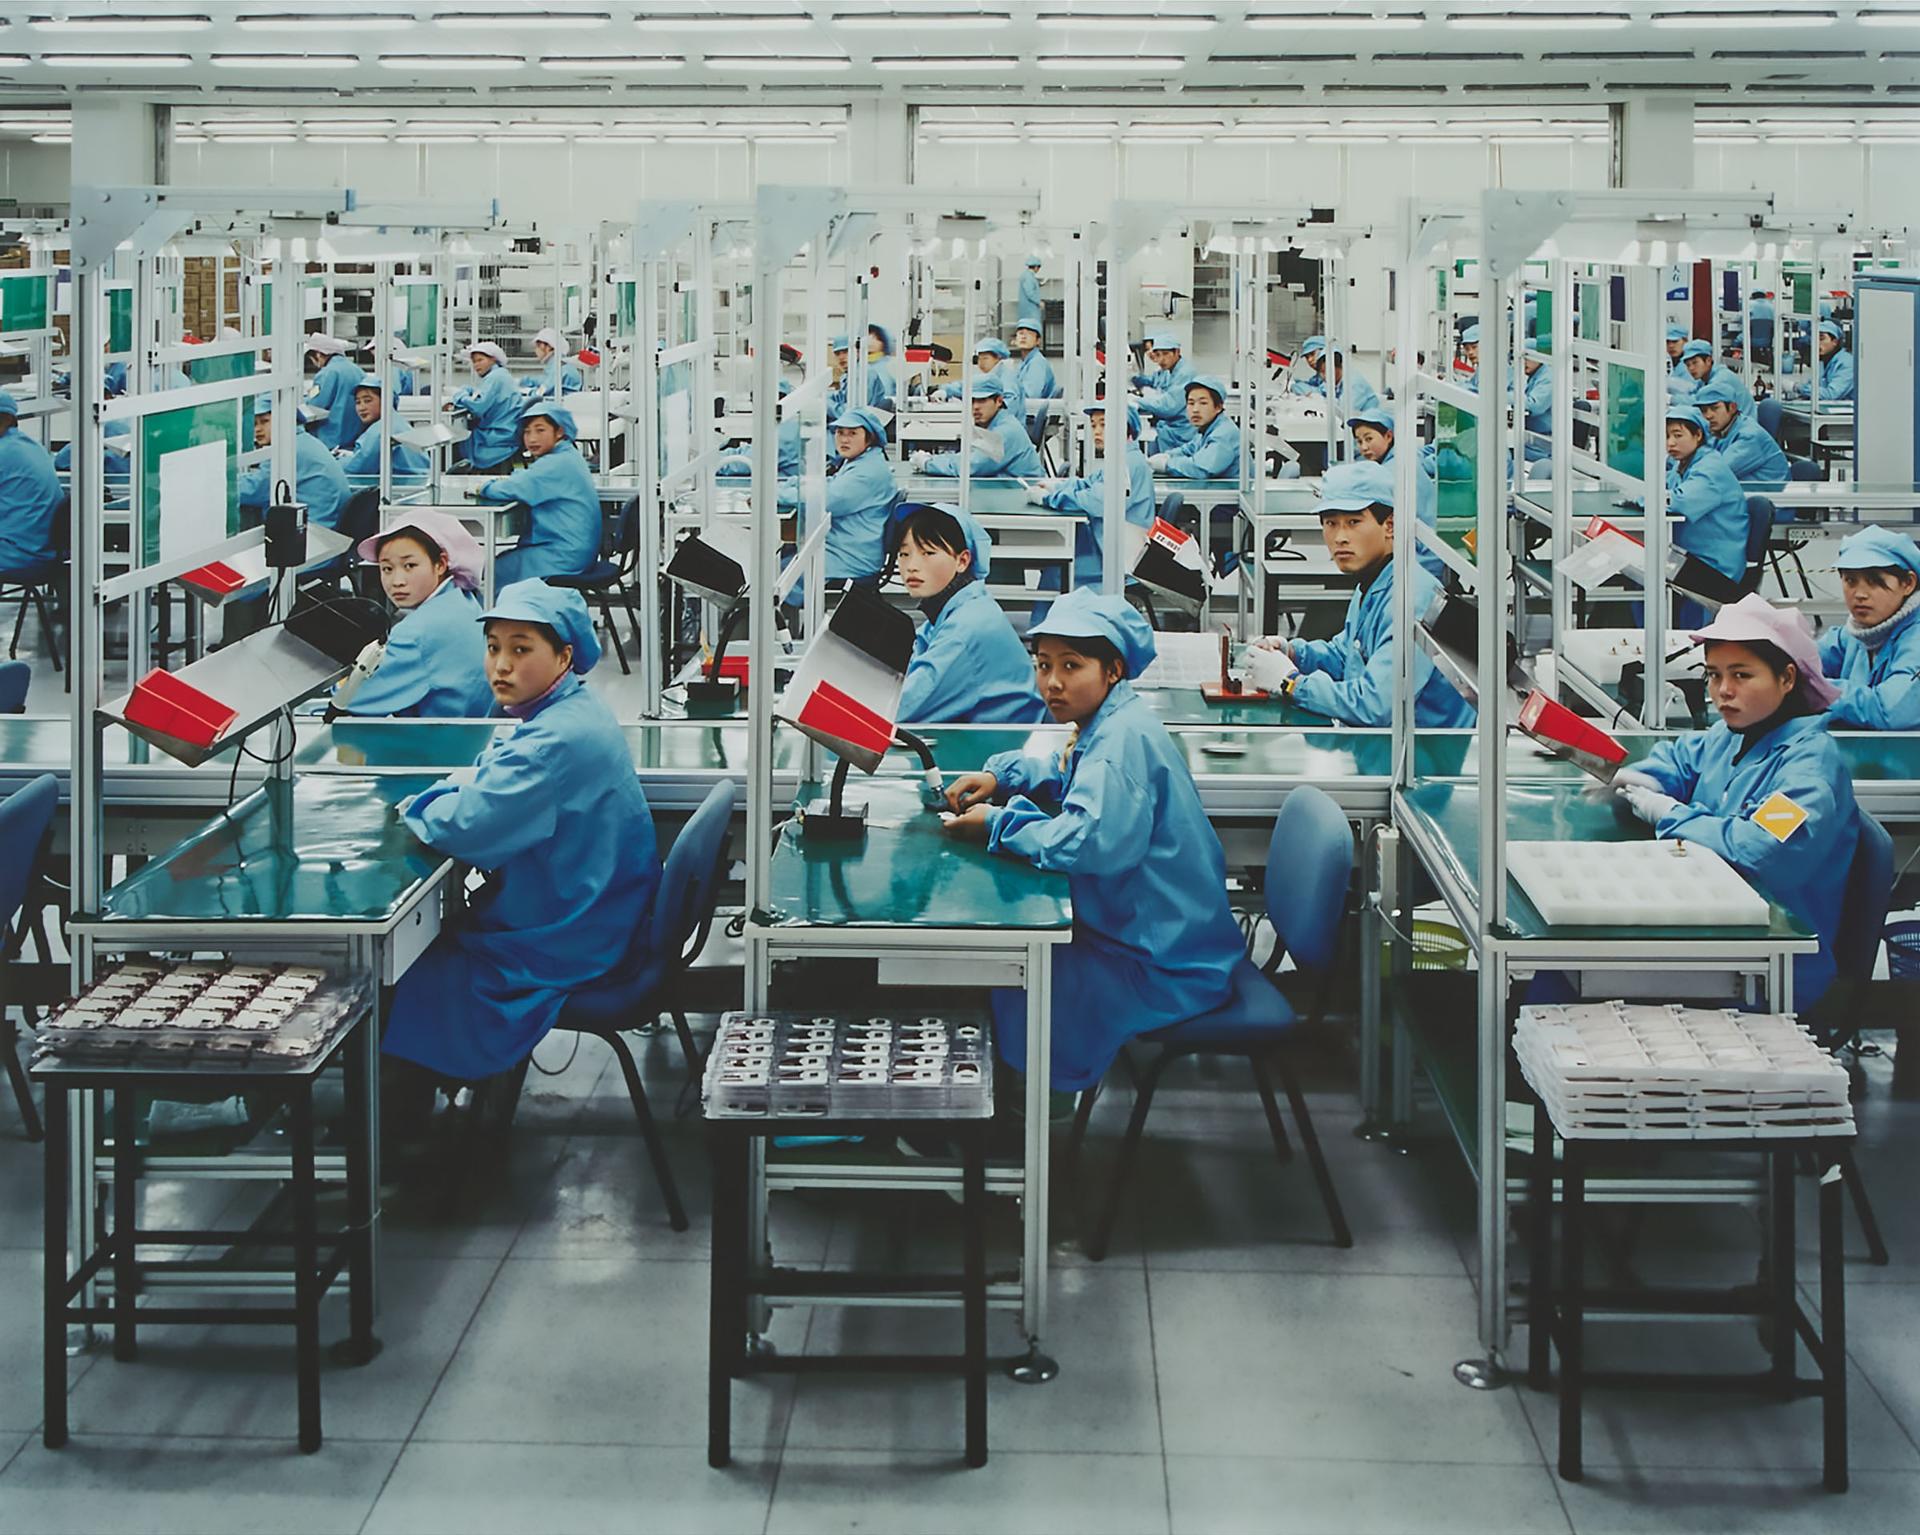 Edward Burtynsky (1955) - Manufacturing #15, Bird Mobile, Ningbo, Zhejiang Province, China, 2005